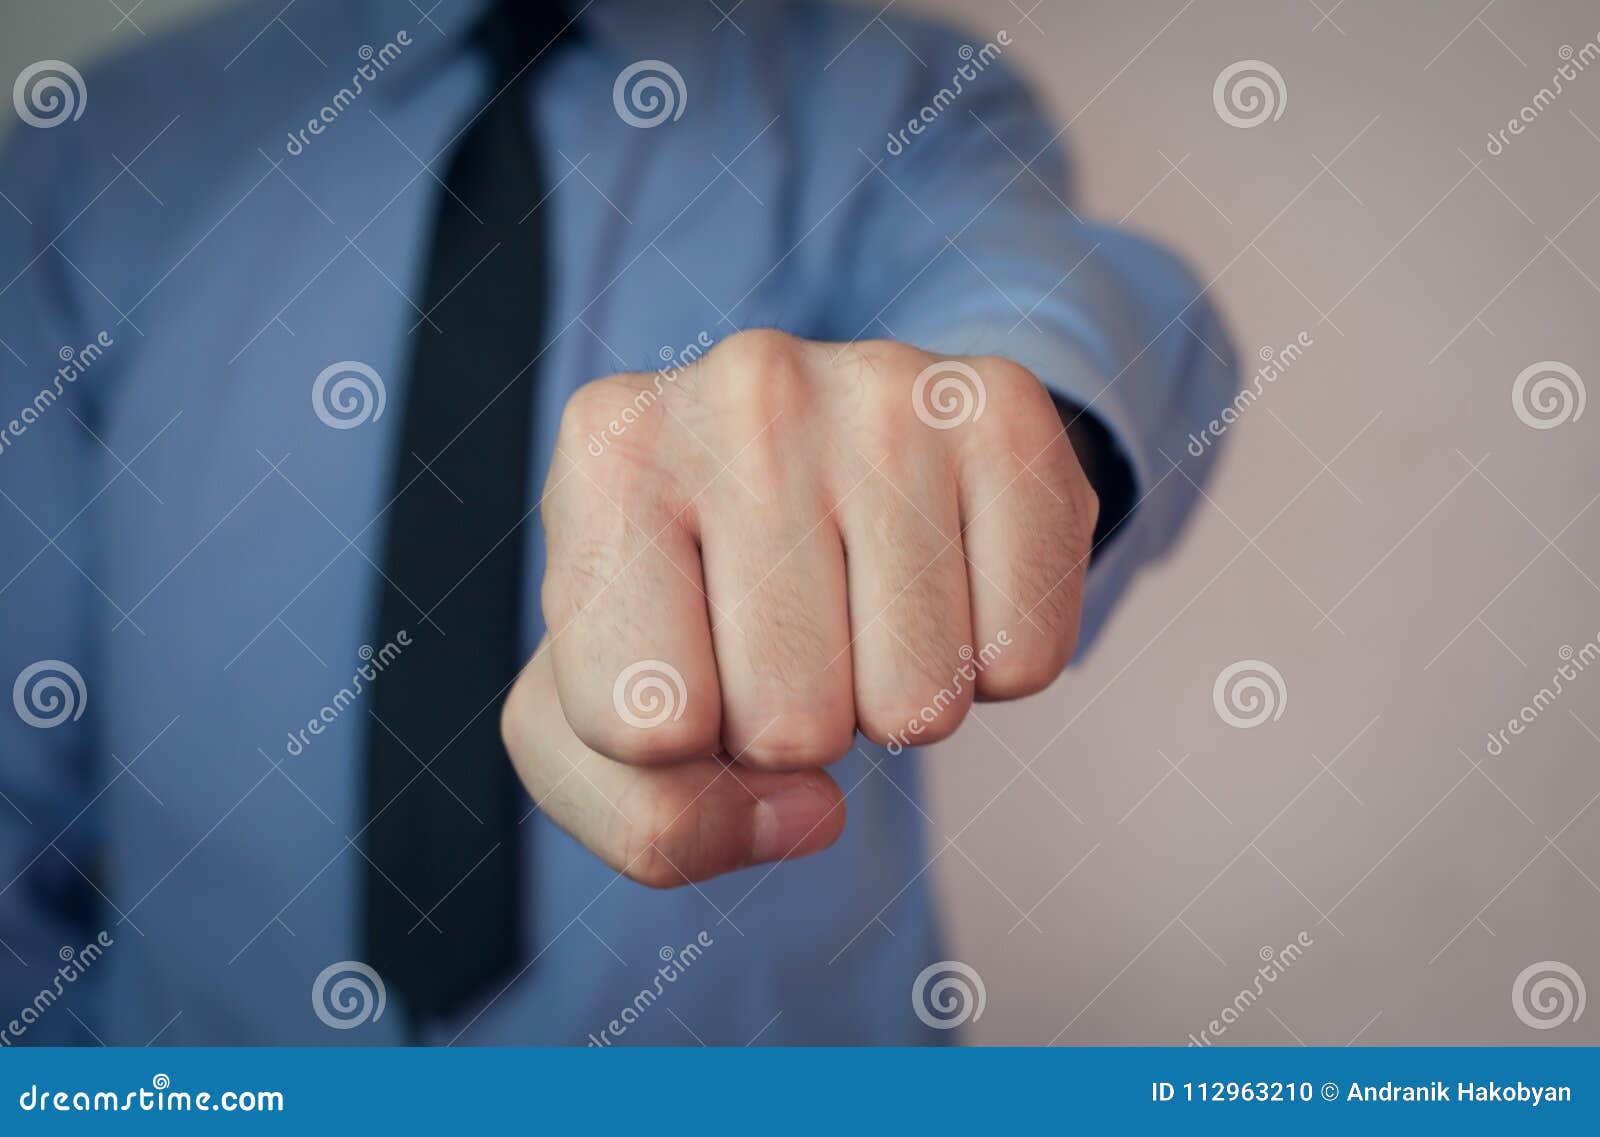 man showing punch.